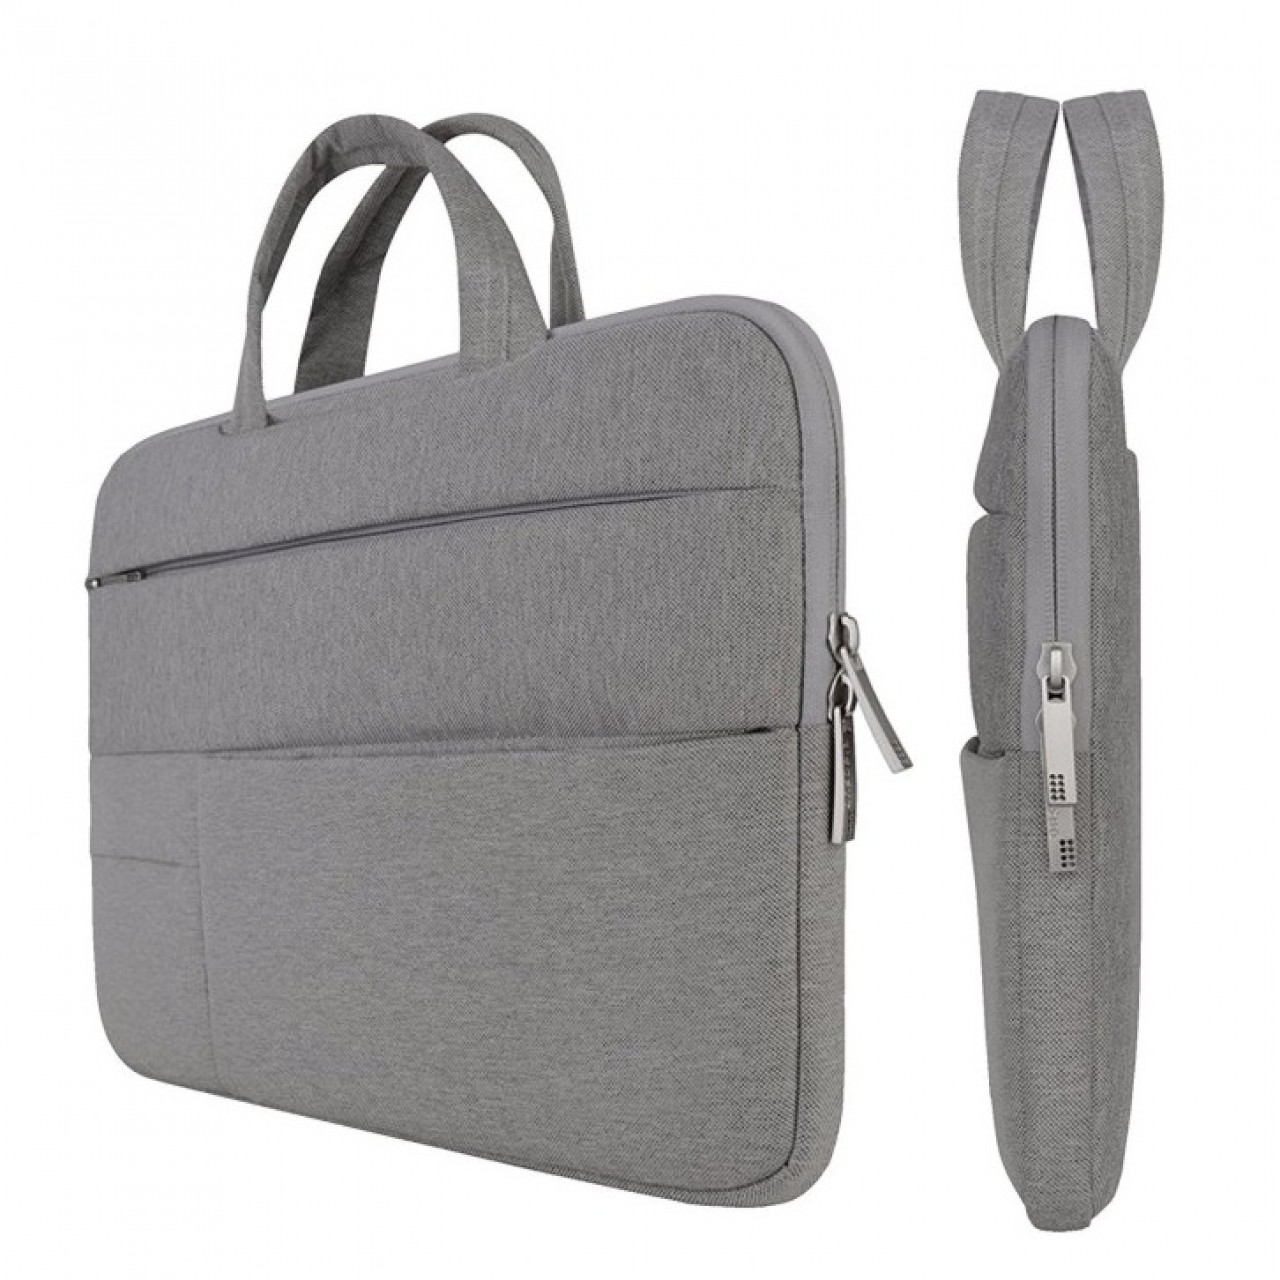 Laptop Slim Bag 14.6Inch - Silver